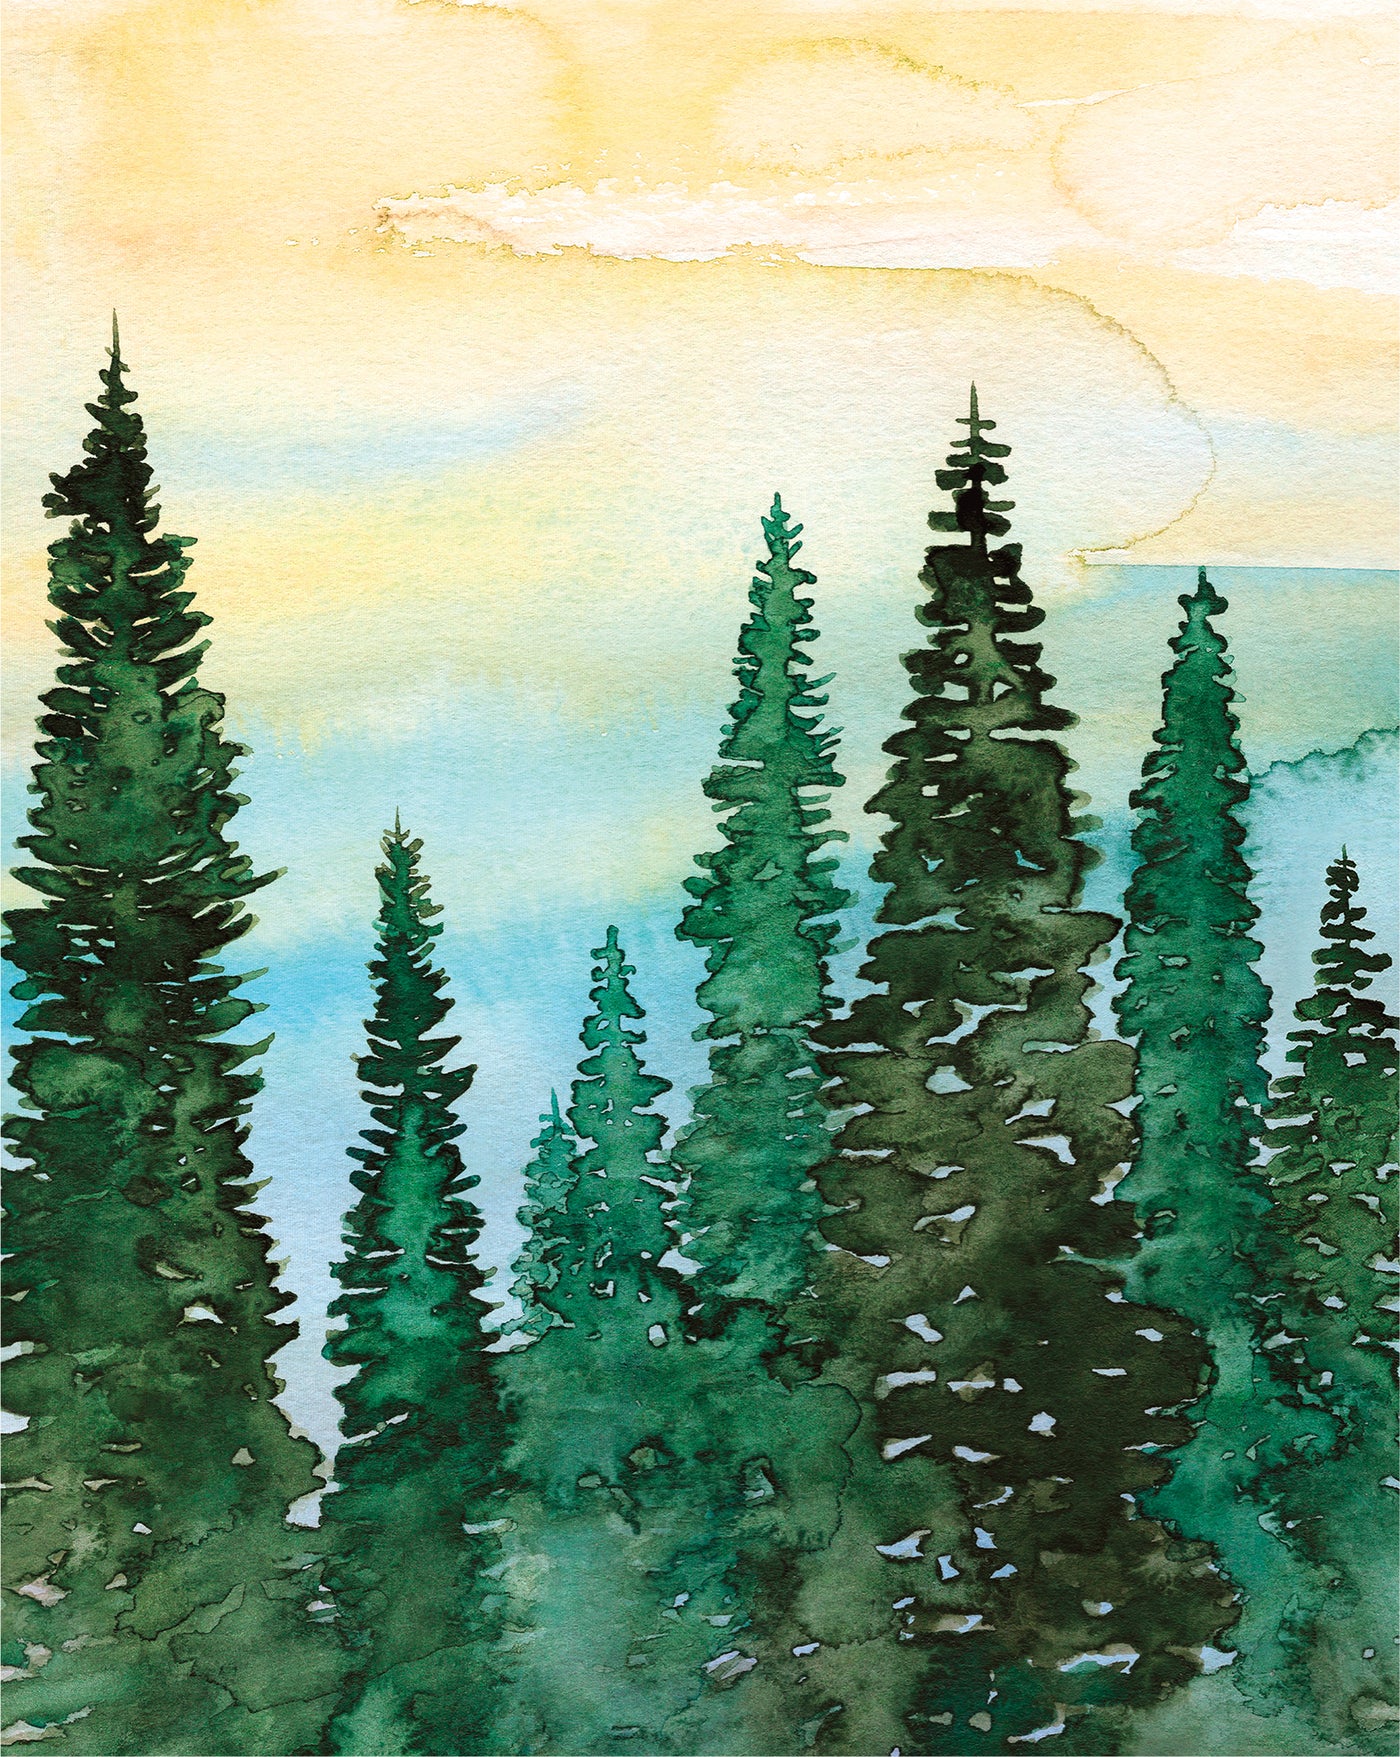 Pine Tree Landscape Art Print